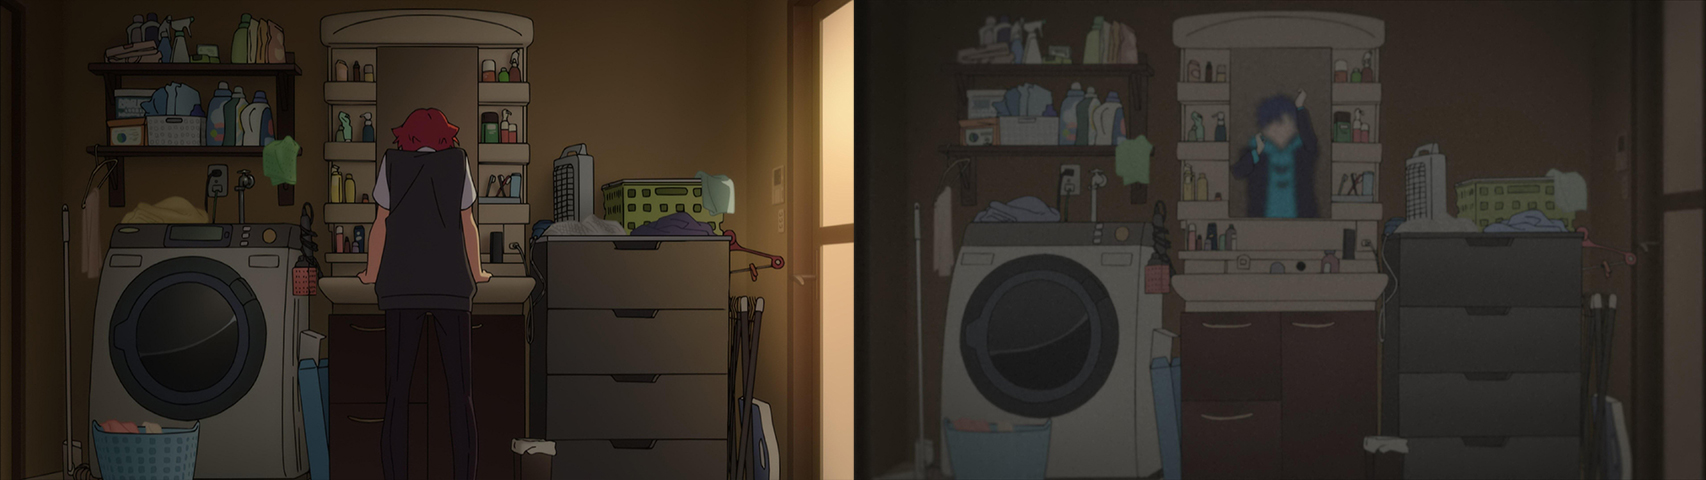 Play Arts Kai Kazuya Mishima - My Anime Shelf